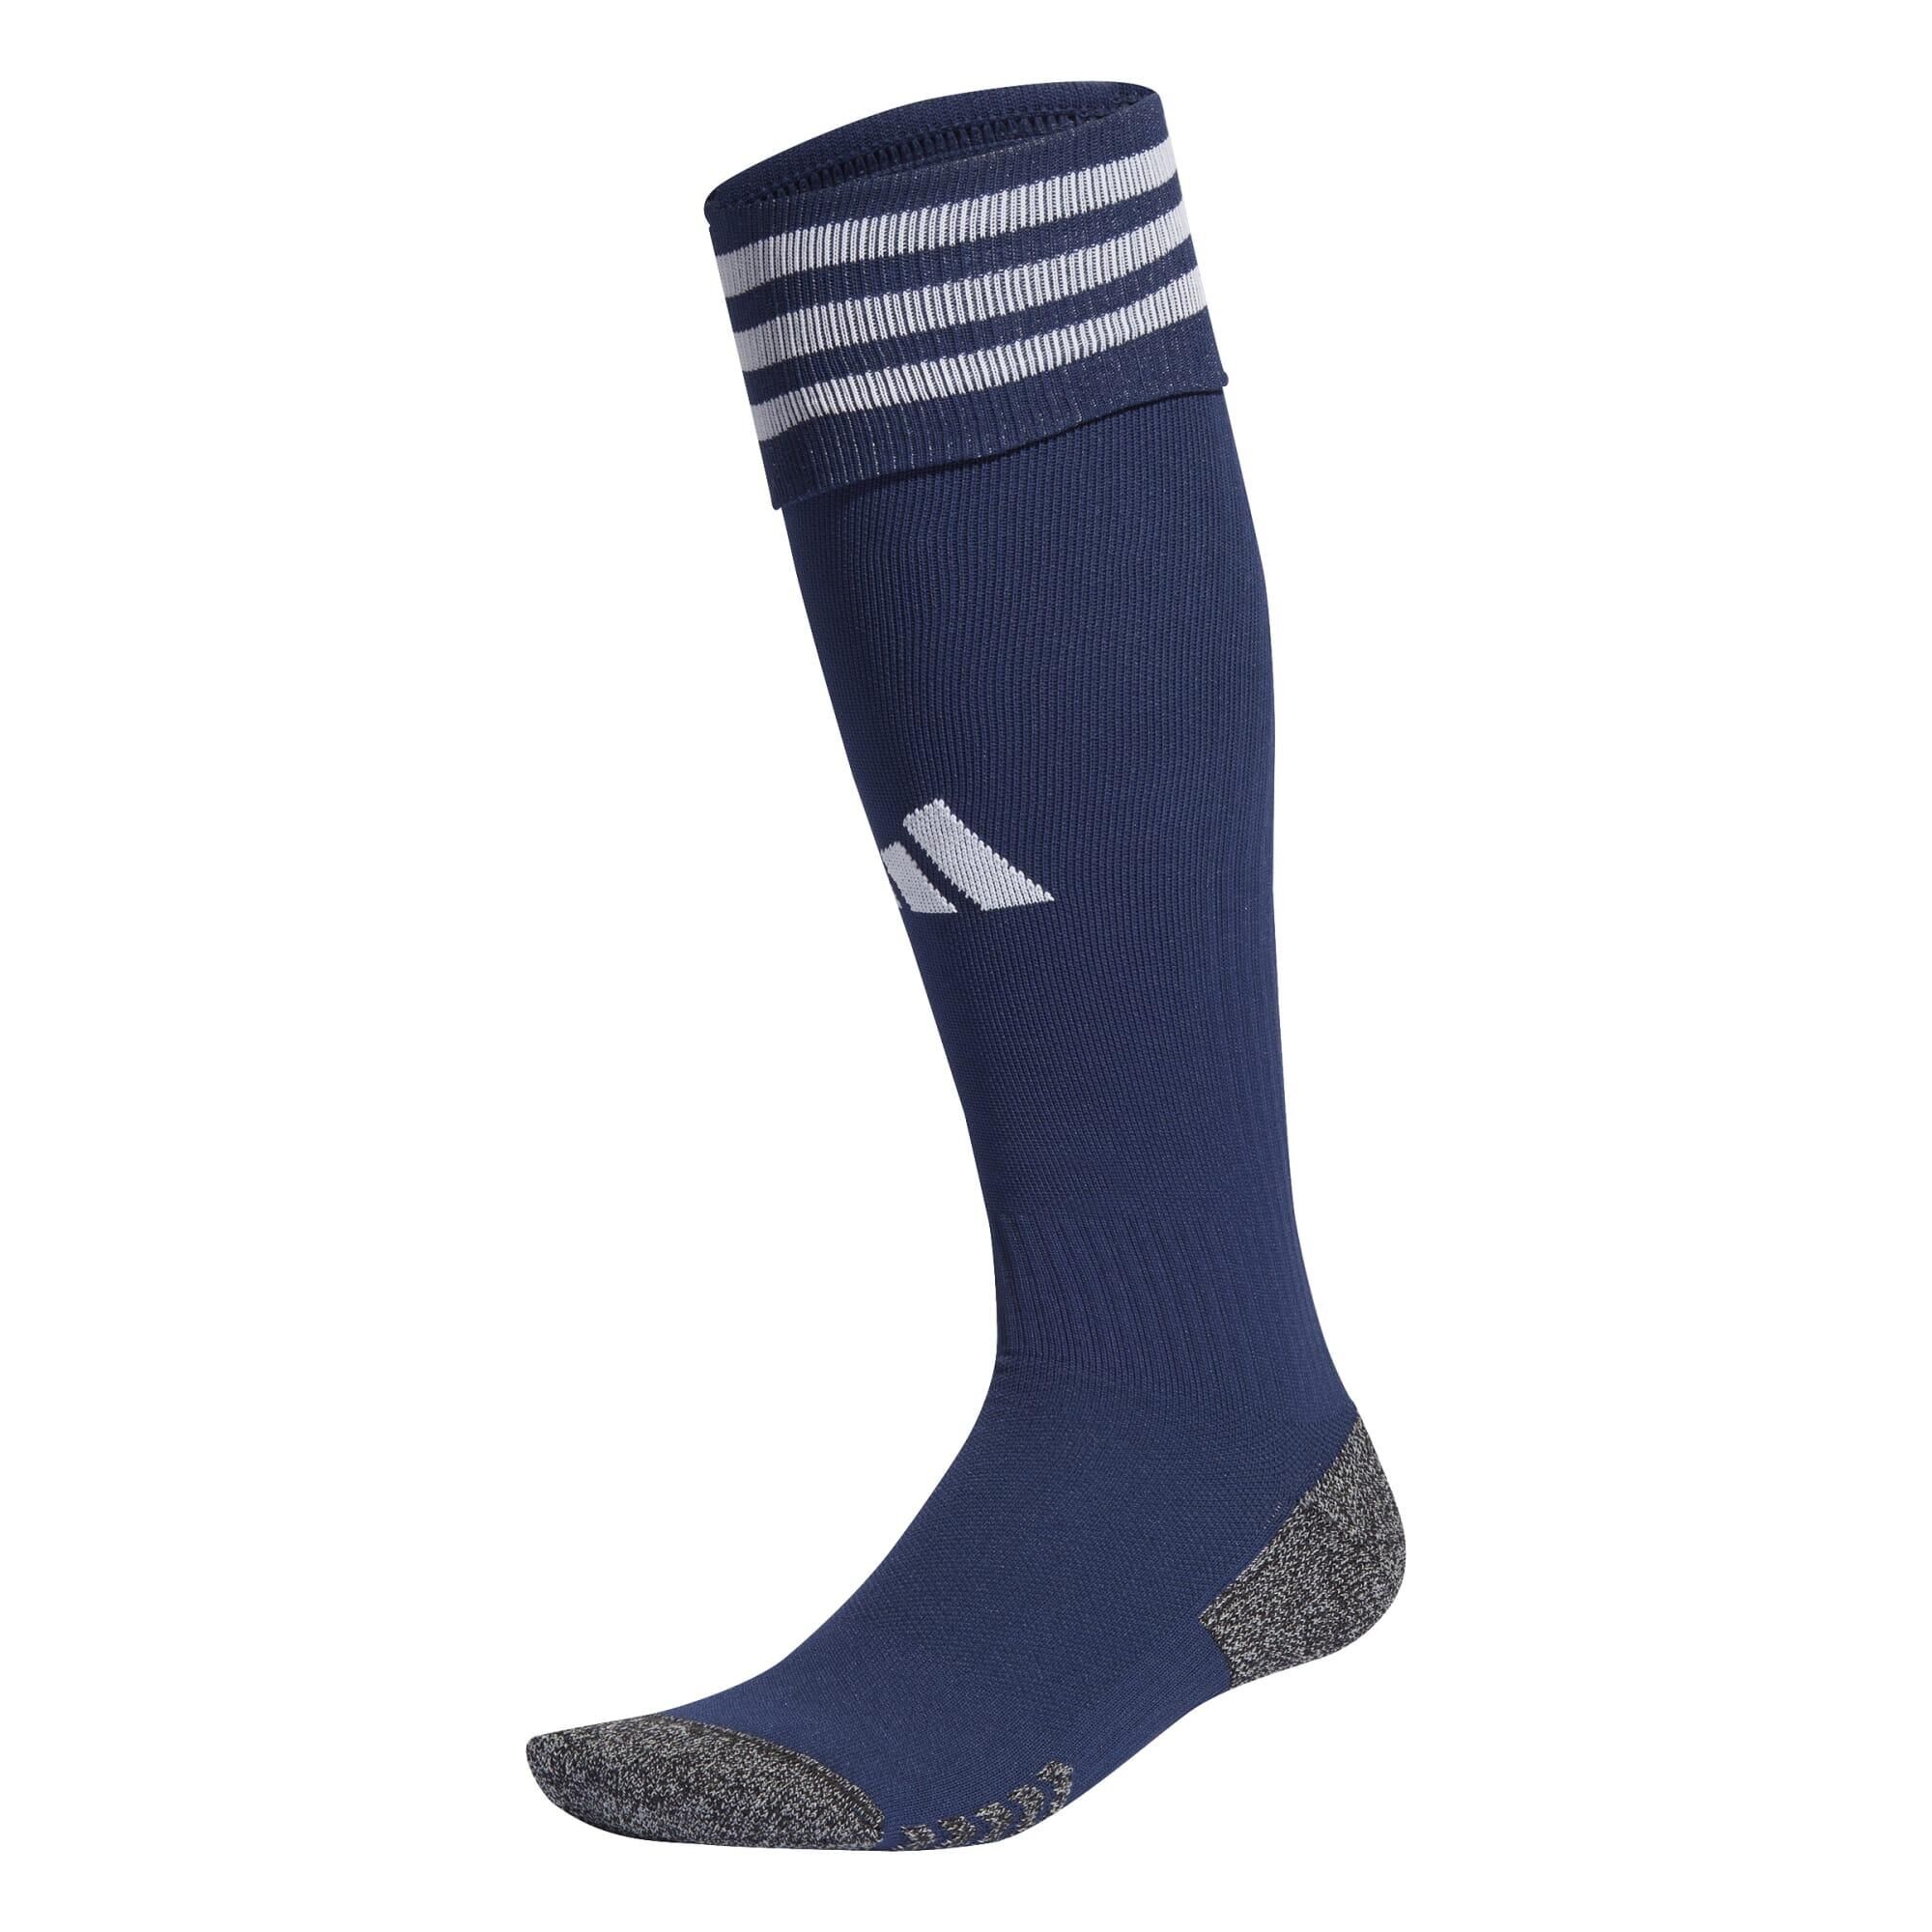 ADIDAS Adult Football Socks Milano - Navy Blue